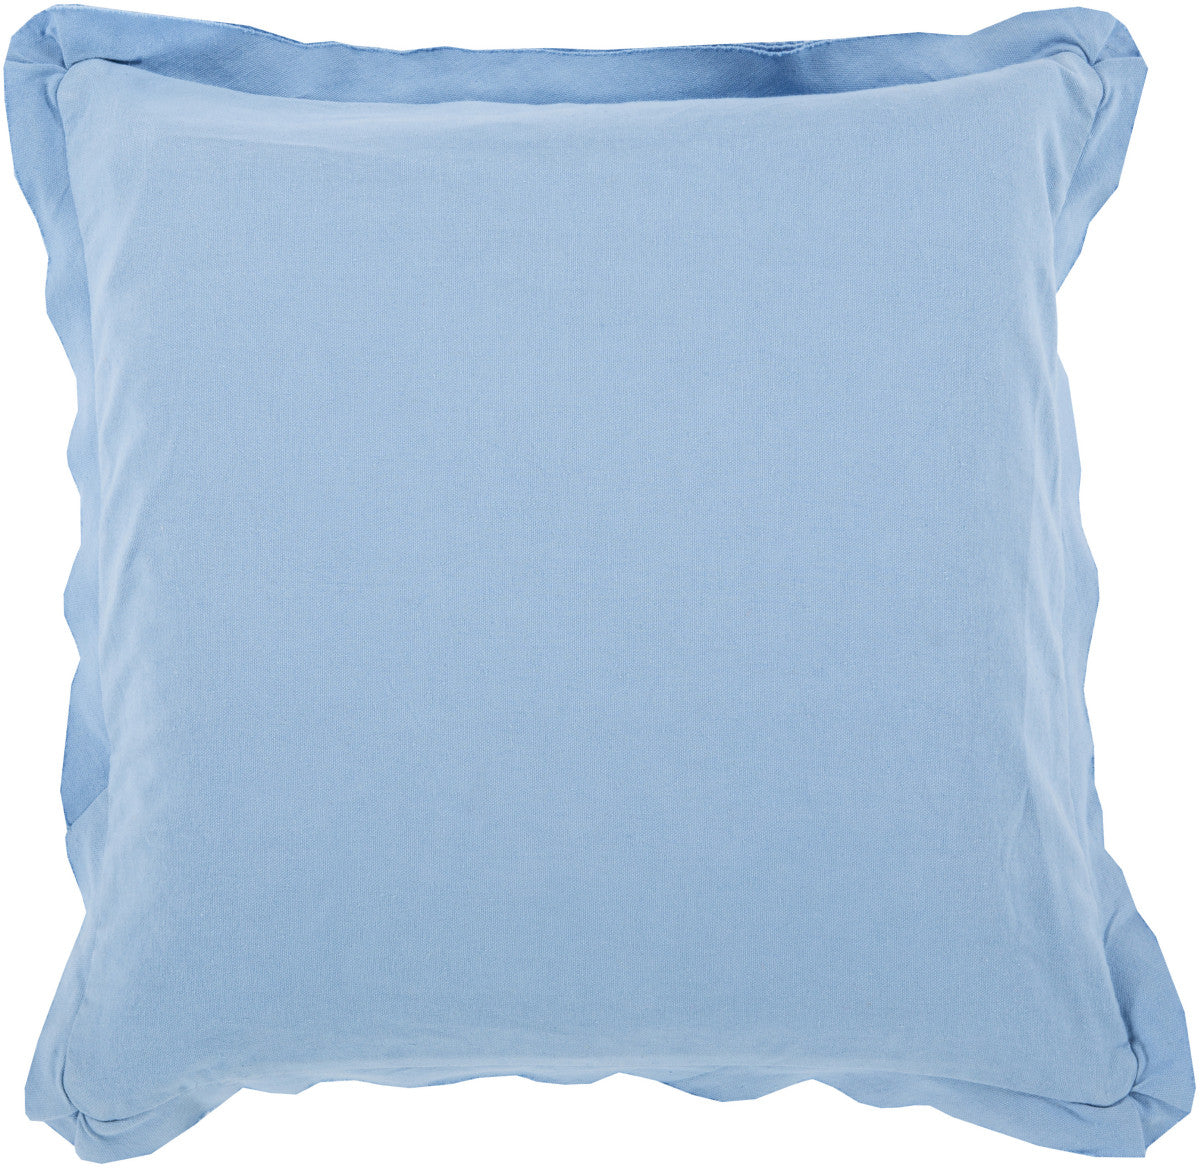 Surya Triple Flange Simple Sophistication TF-002 Pillow main image